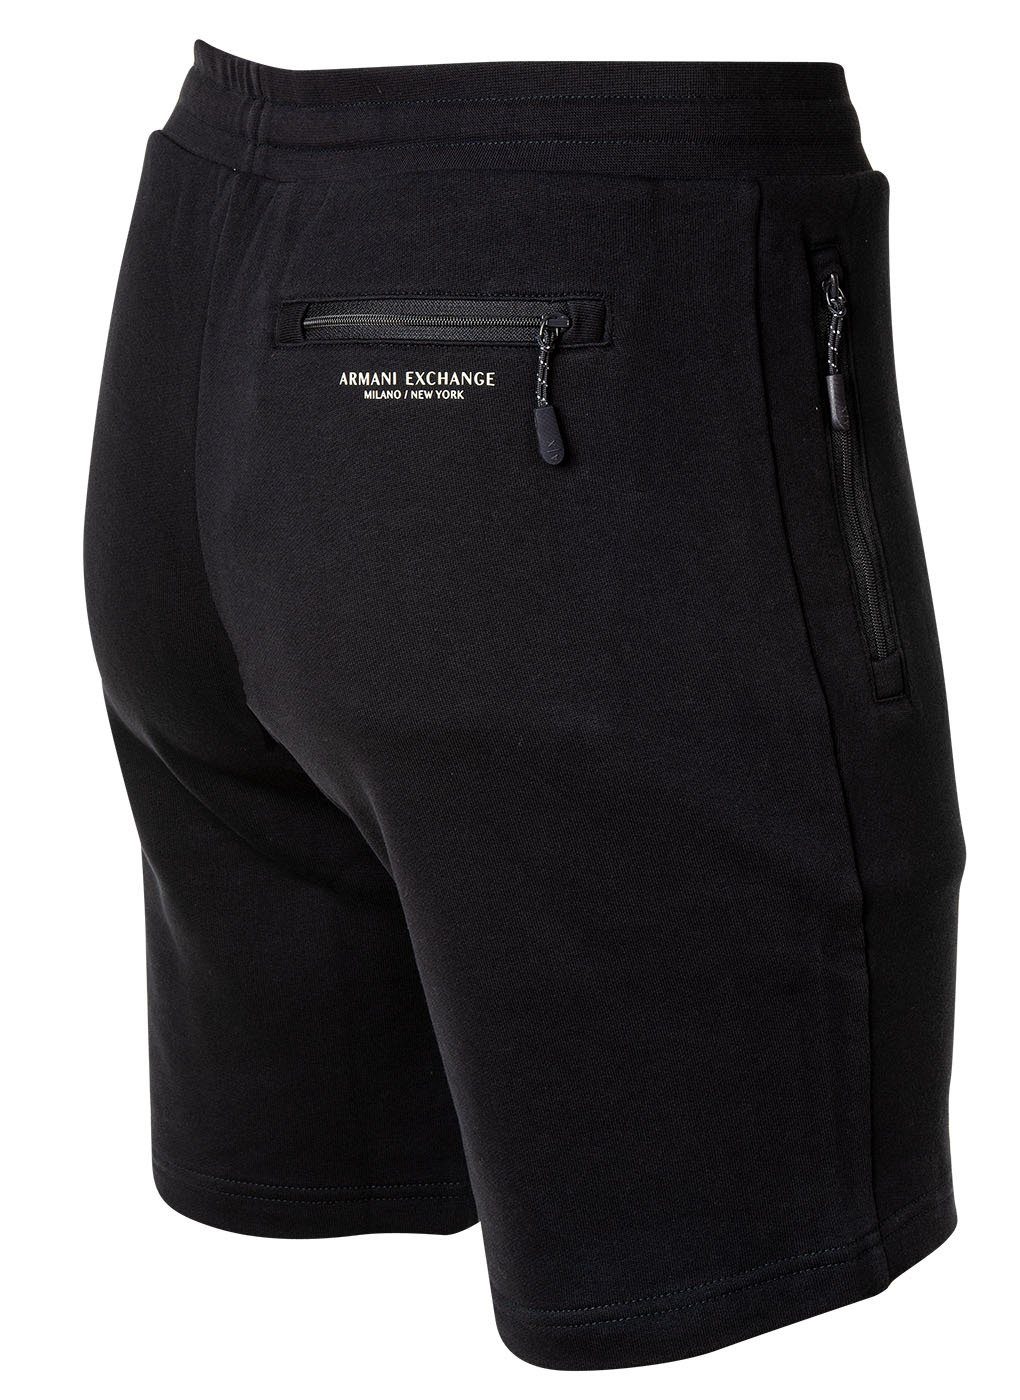 ARMANI EXCHANGE Sweatshorts kurz Marine Loungewear Jogginghose Pants, Herren 